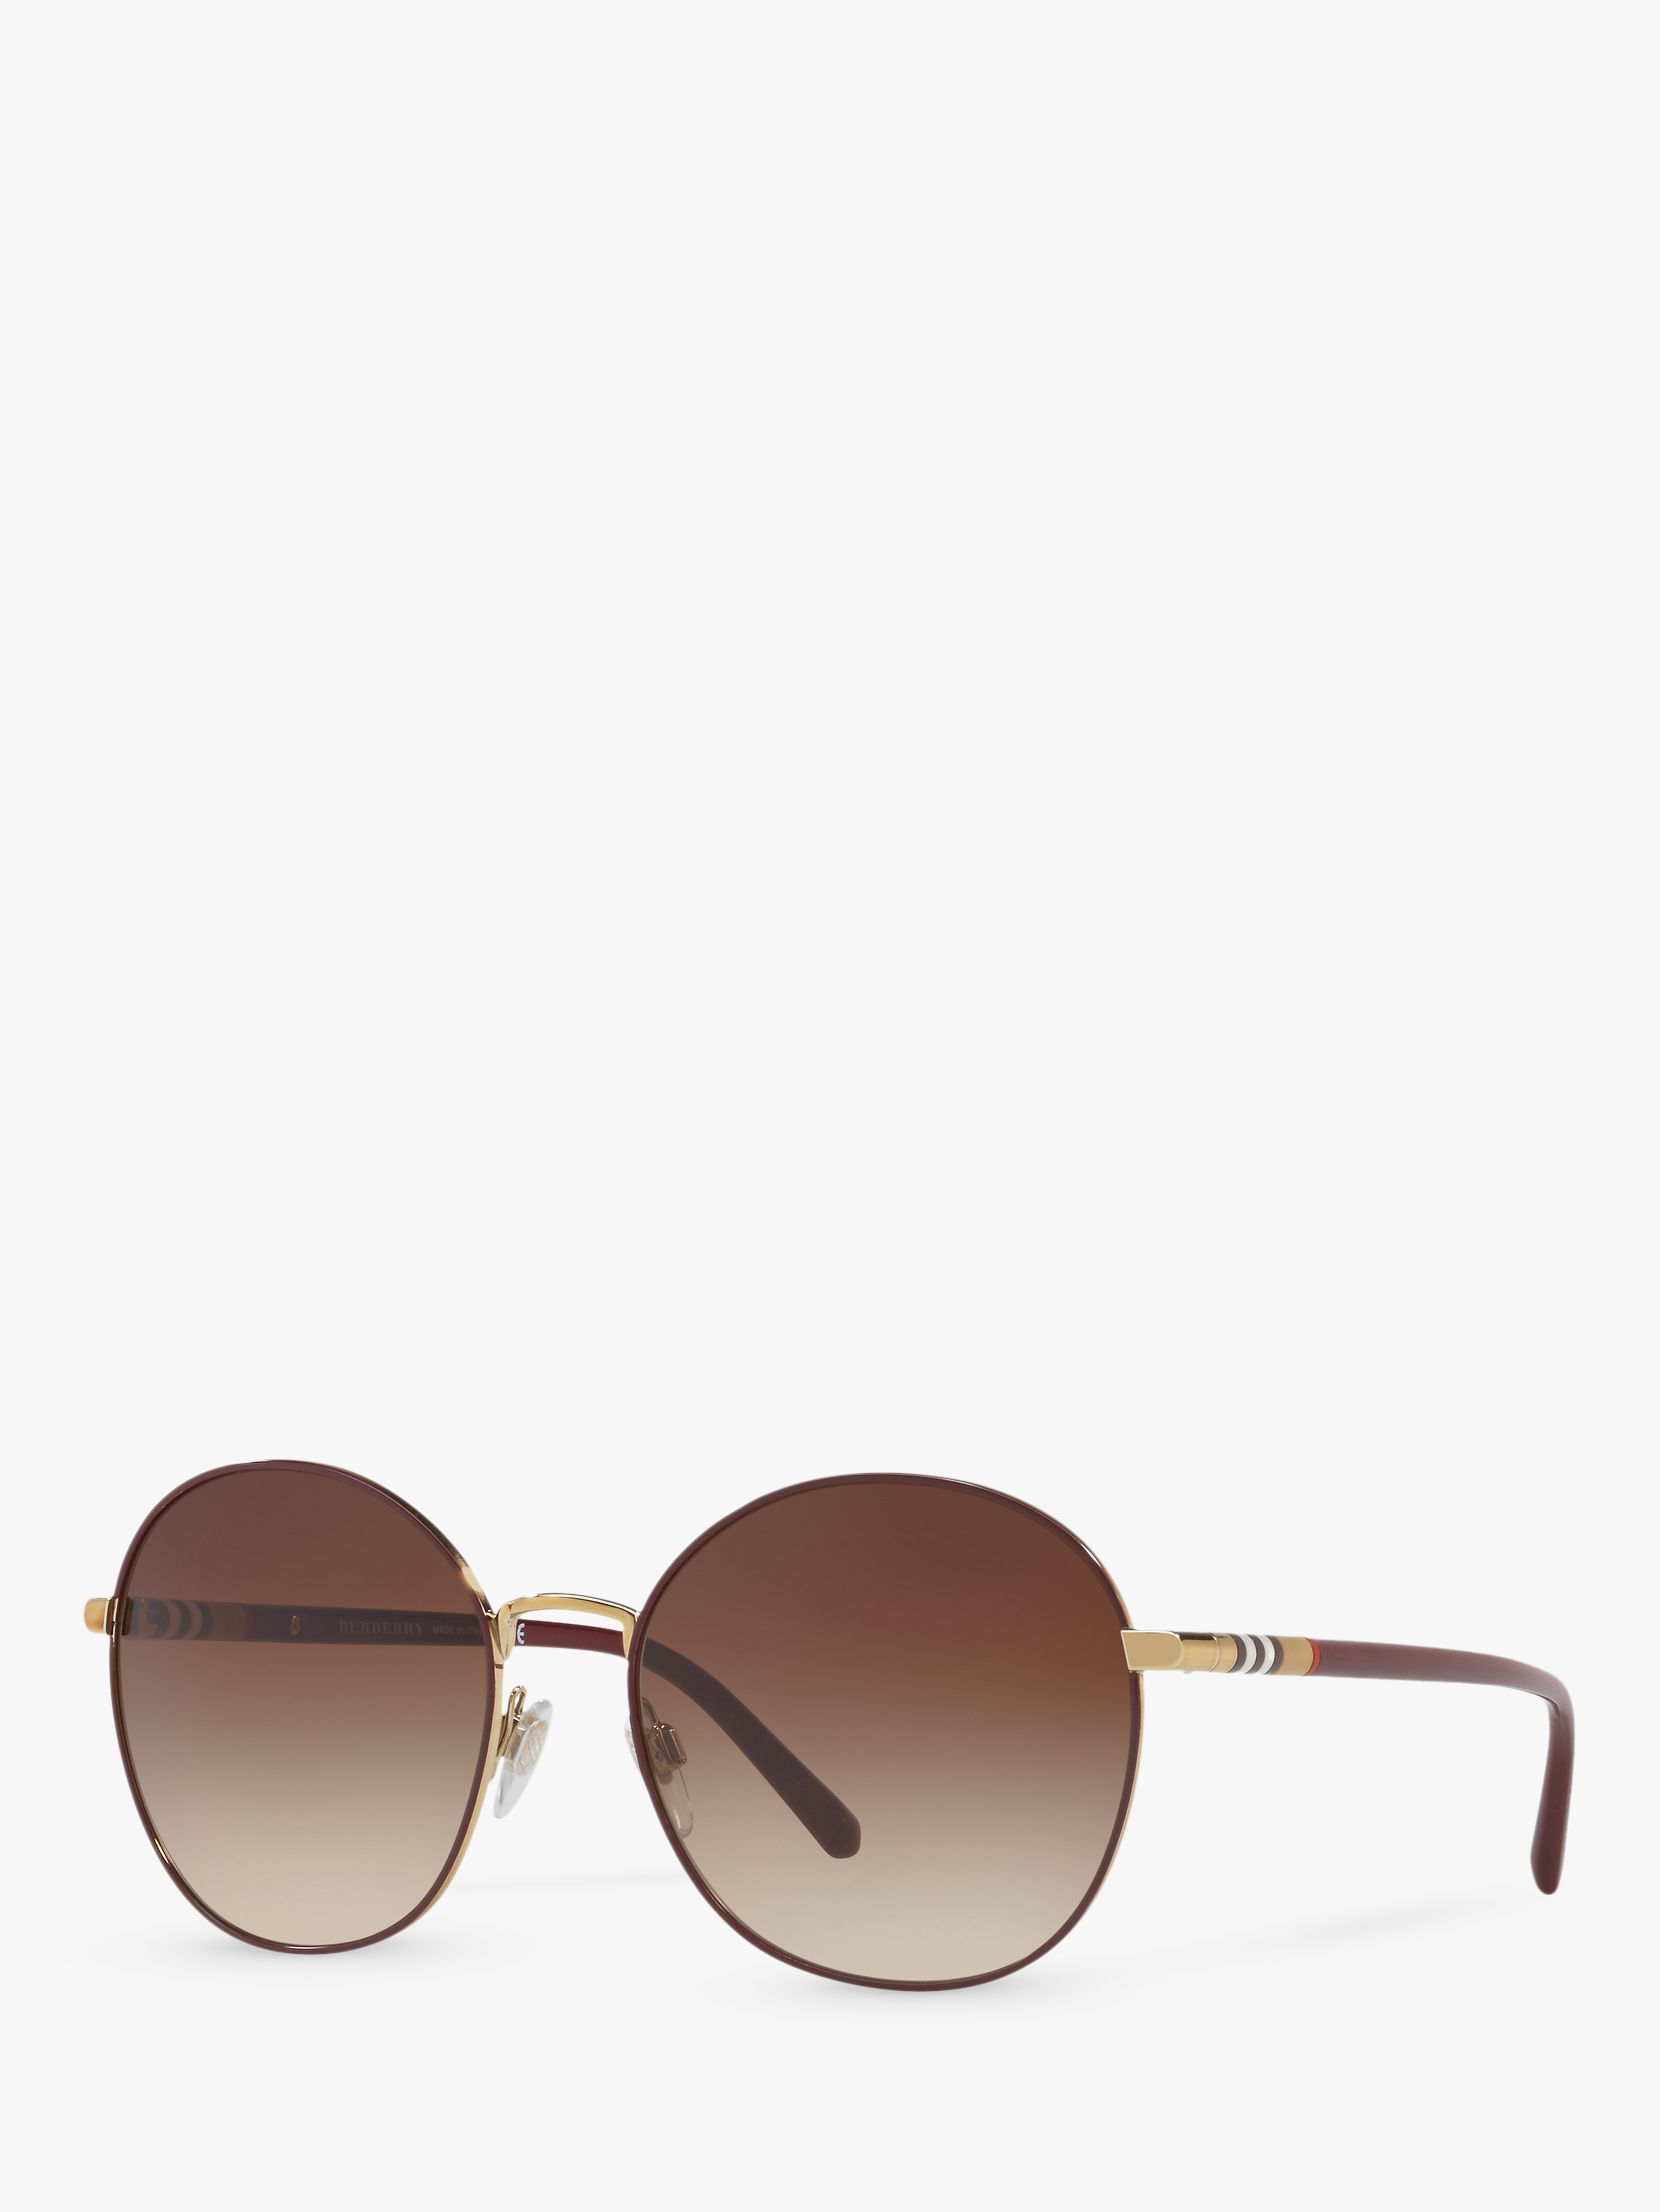 Round Sunglasses, Gold/Brown Gradient 